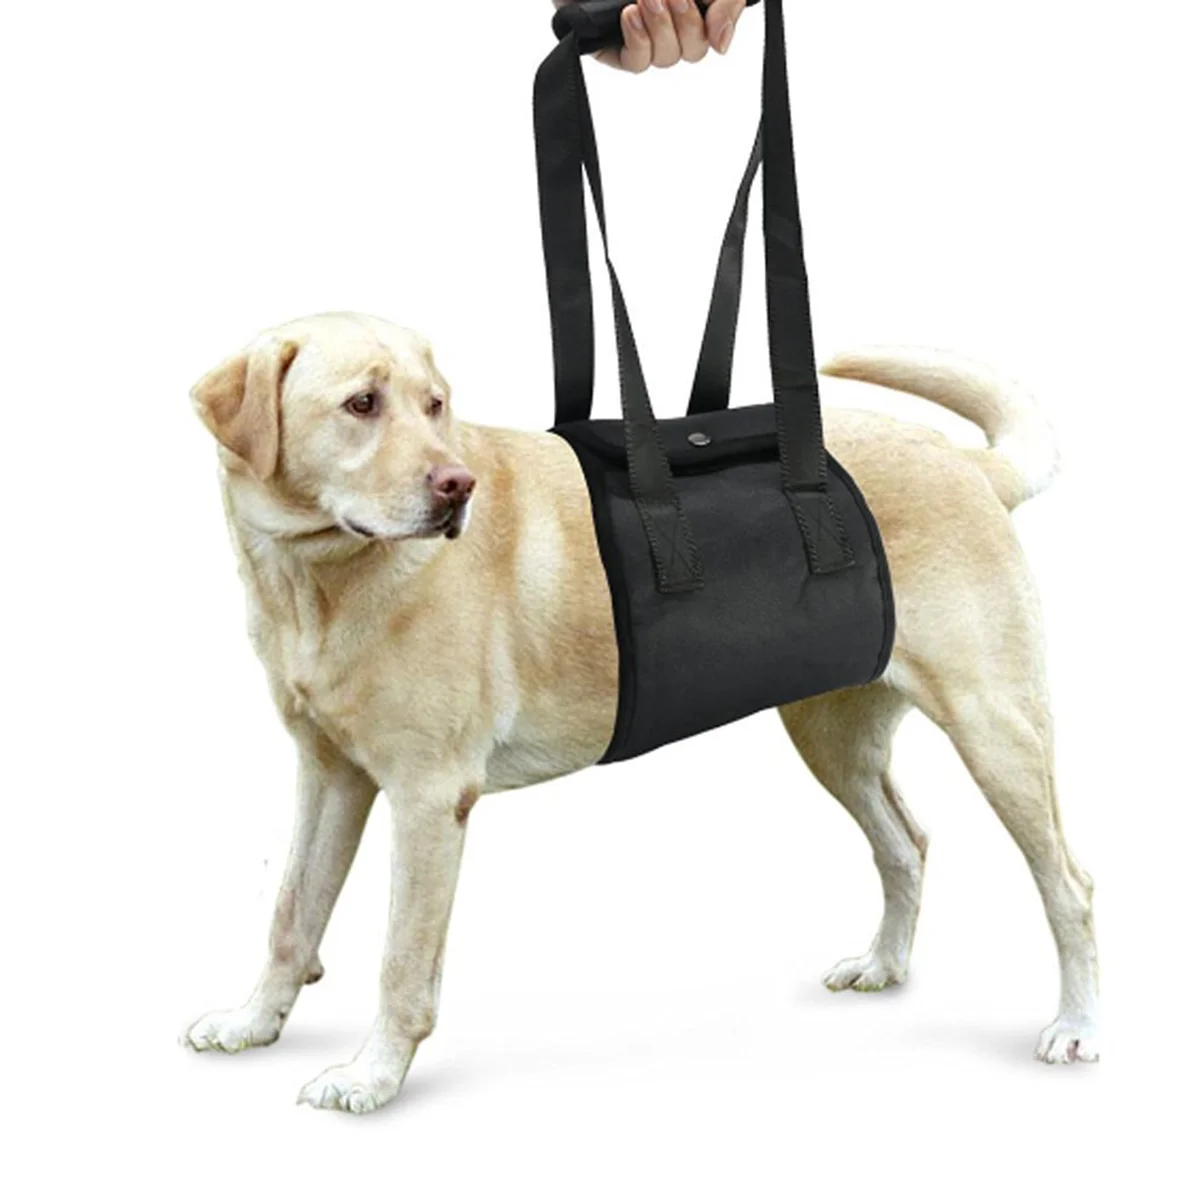 

Dog Harness Support Dogs Leash Large Lift Legs Vest Rehabilitation Sling Hind Leg Lifting Wheelchair Backpack Assist Medium